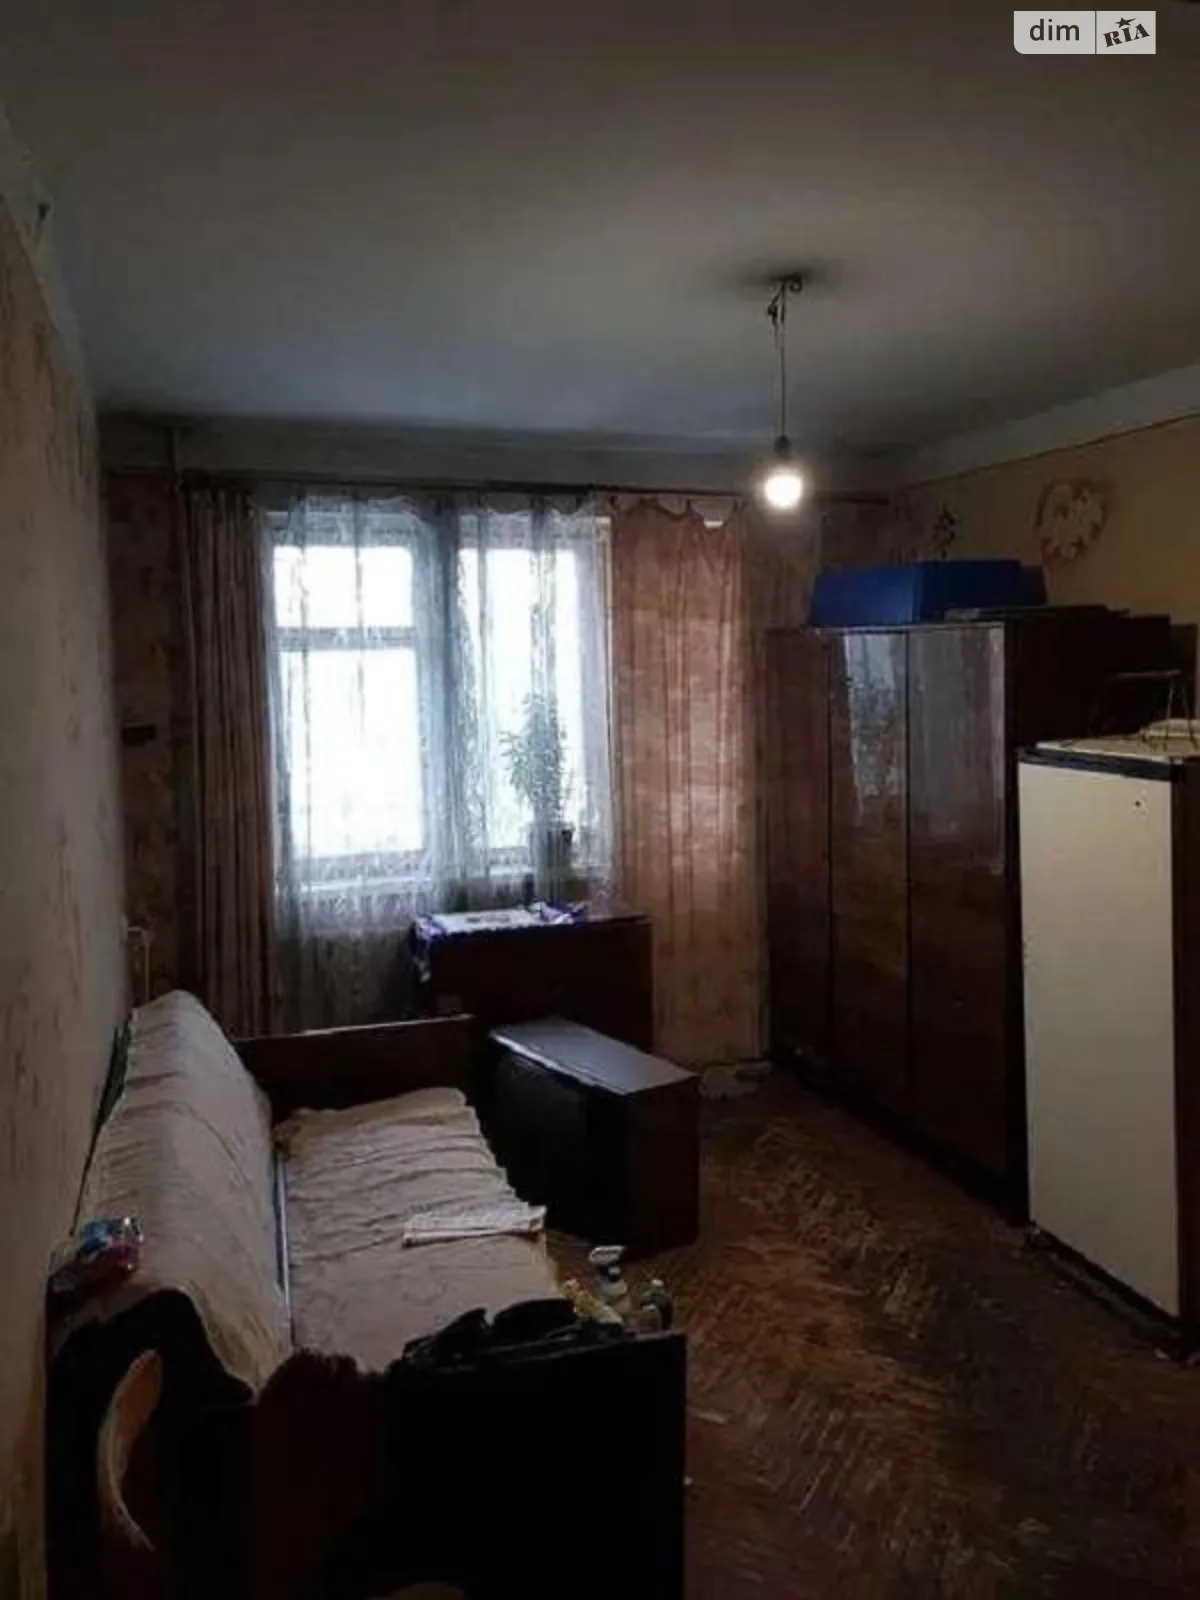 Продается комната 23 кв. м в Харькове - фото 2